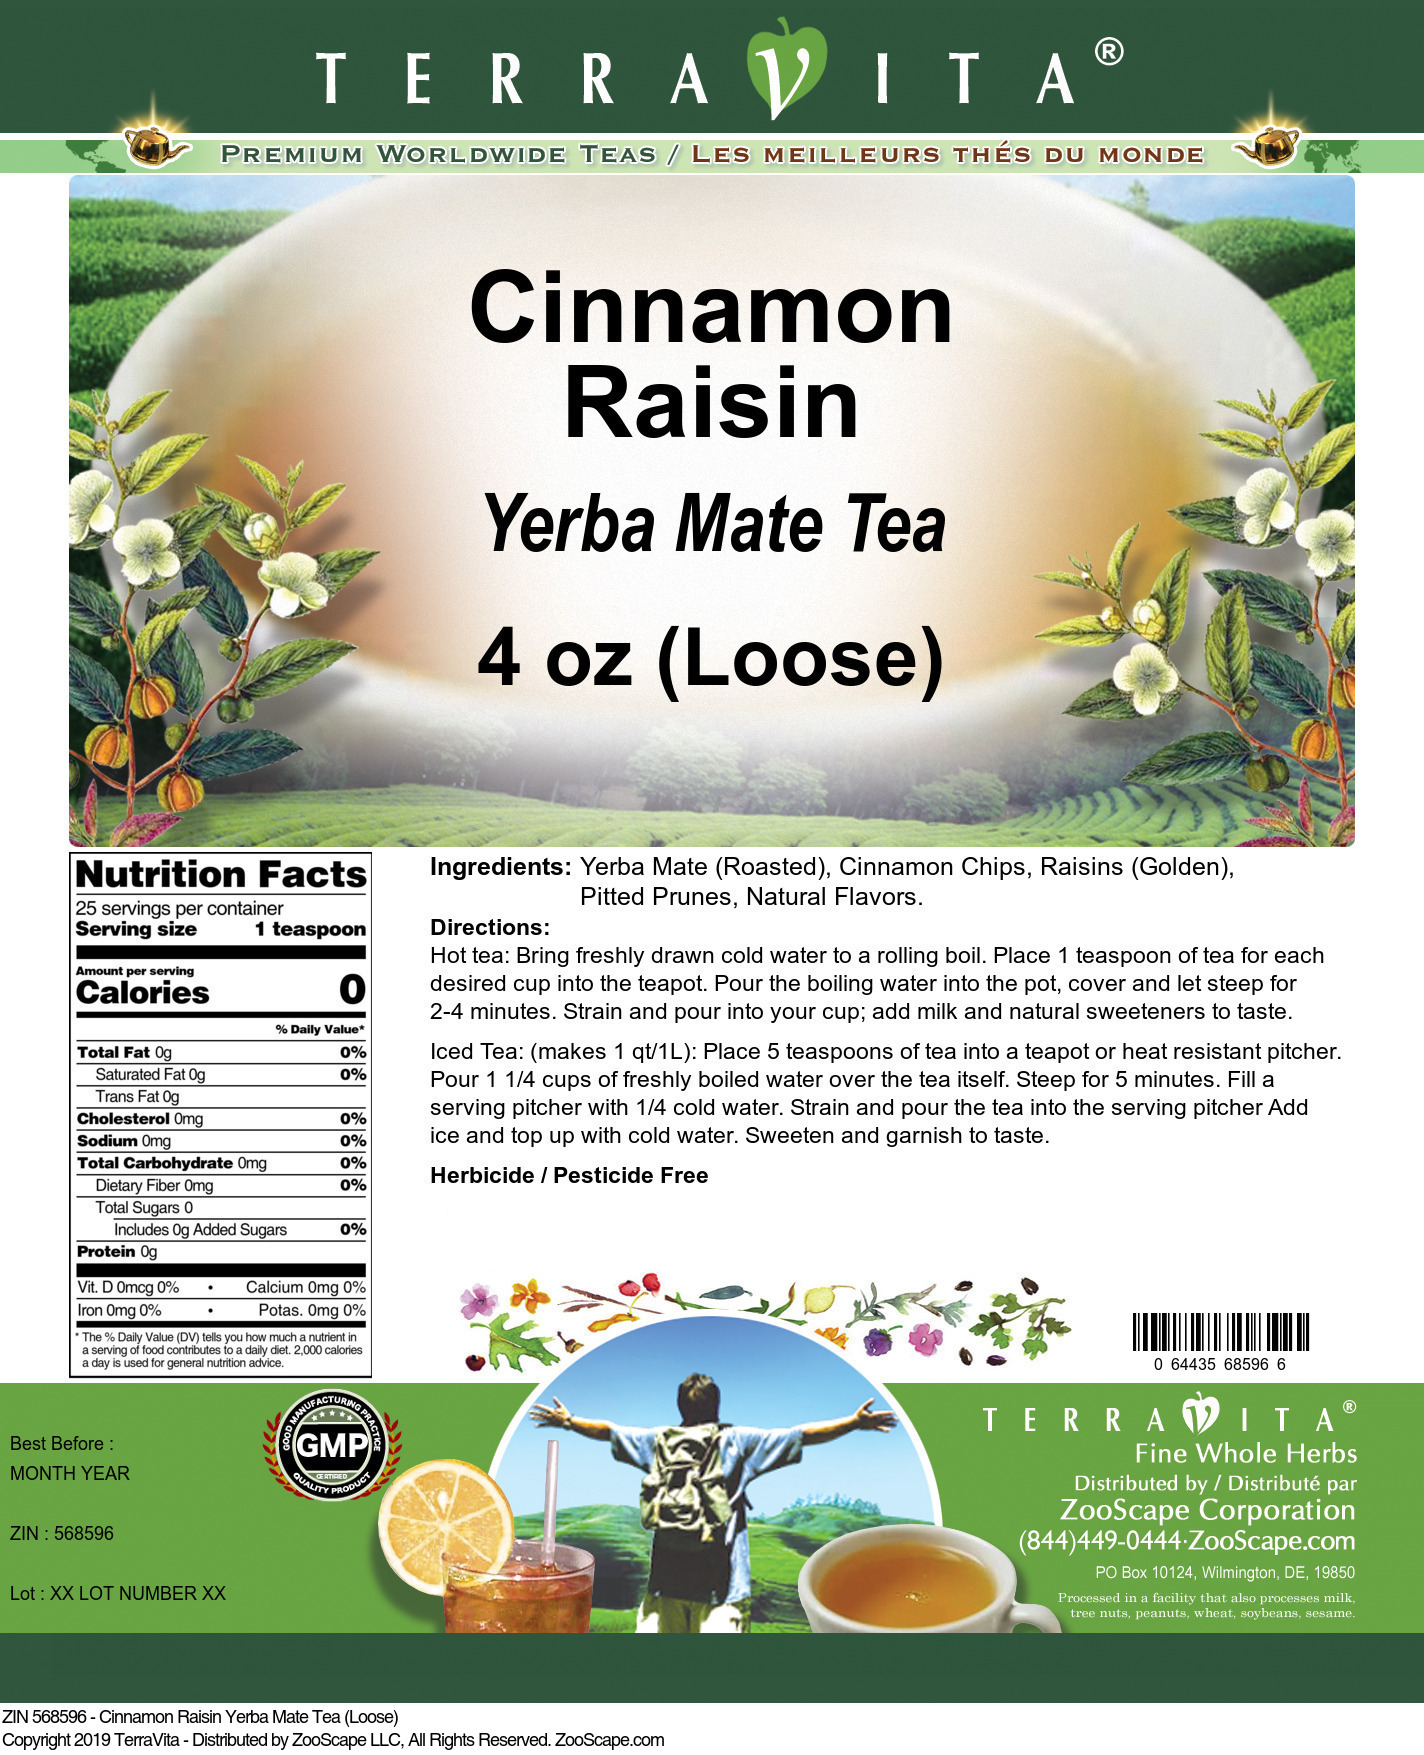 Cinnamon Raisin Yerba Mate Tea (Loose) - Label